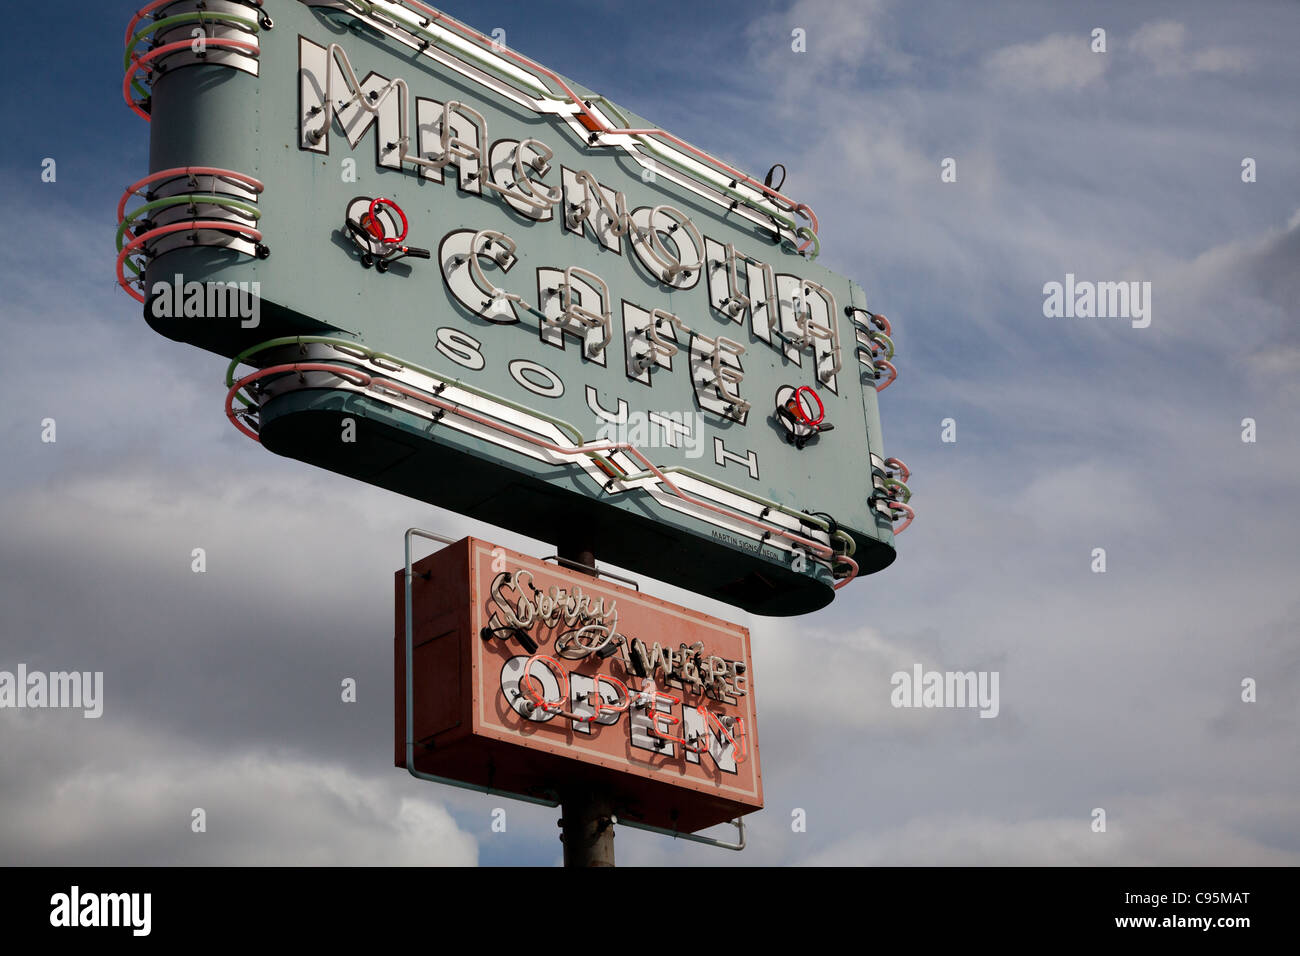 Magnolia Cafe South Neon Sign - Austin, Texas Stock Photo